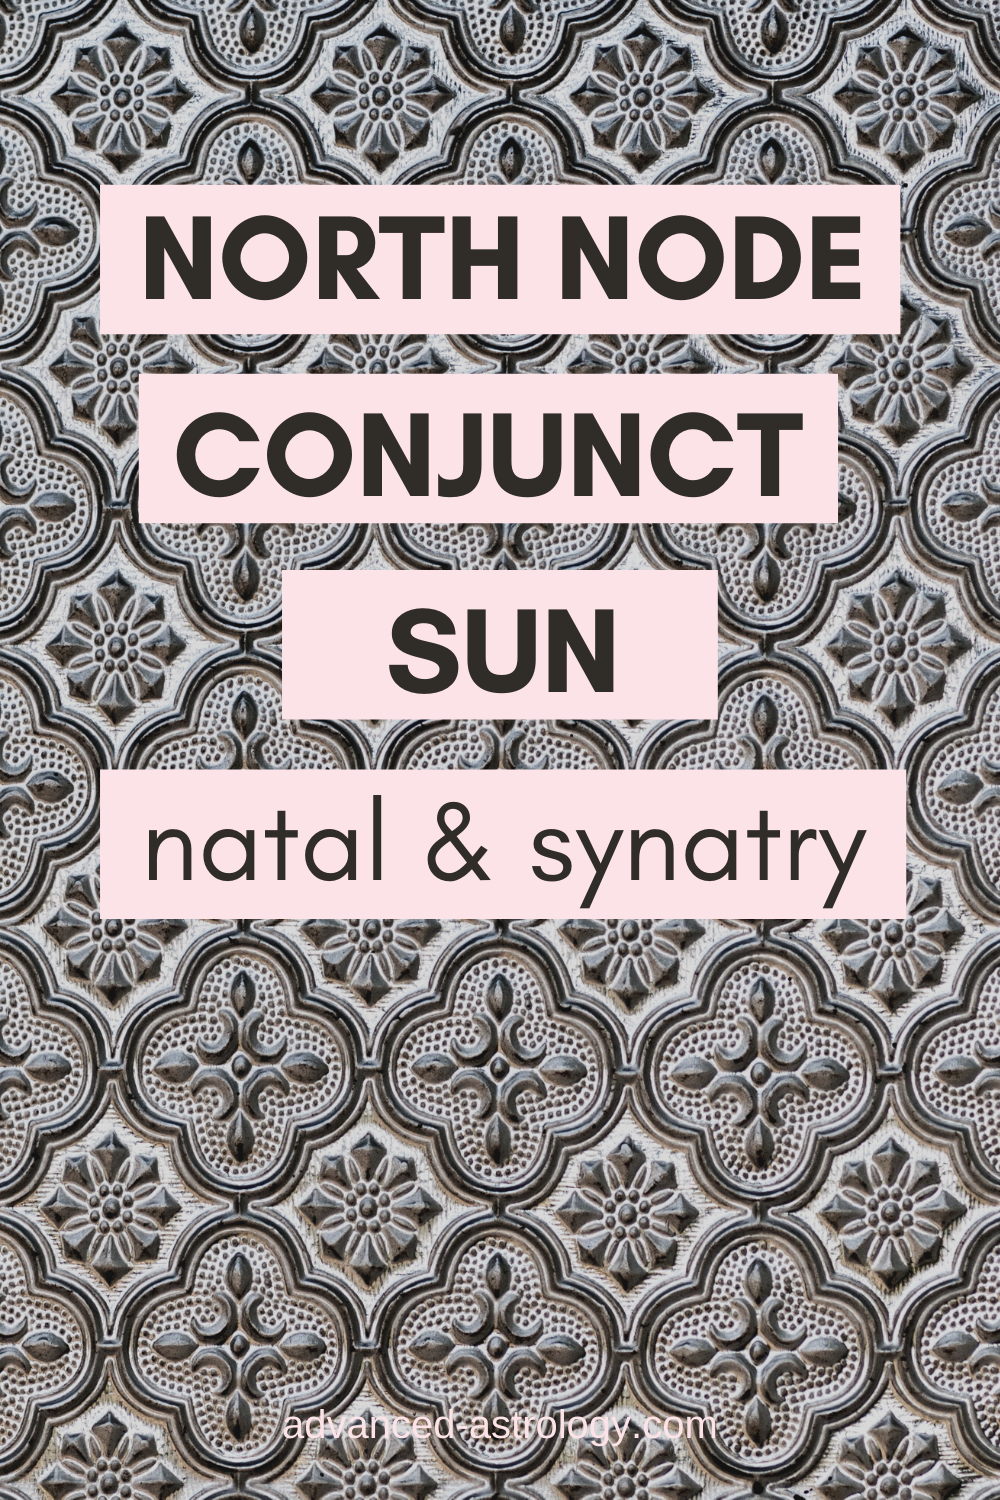  Sun Conjunct Noard Node: Synastry, Natal, en Transit betsjutting